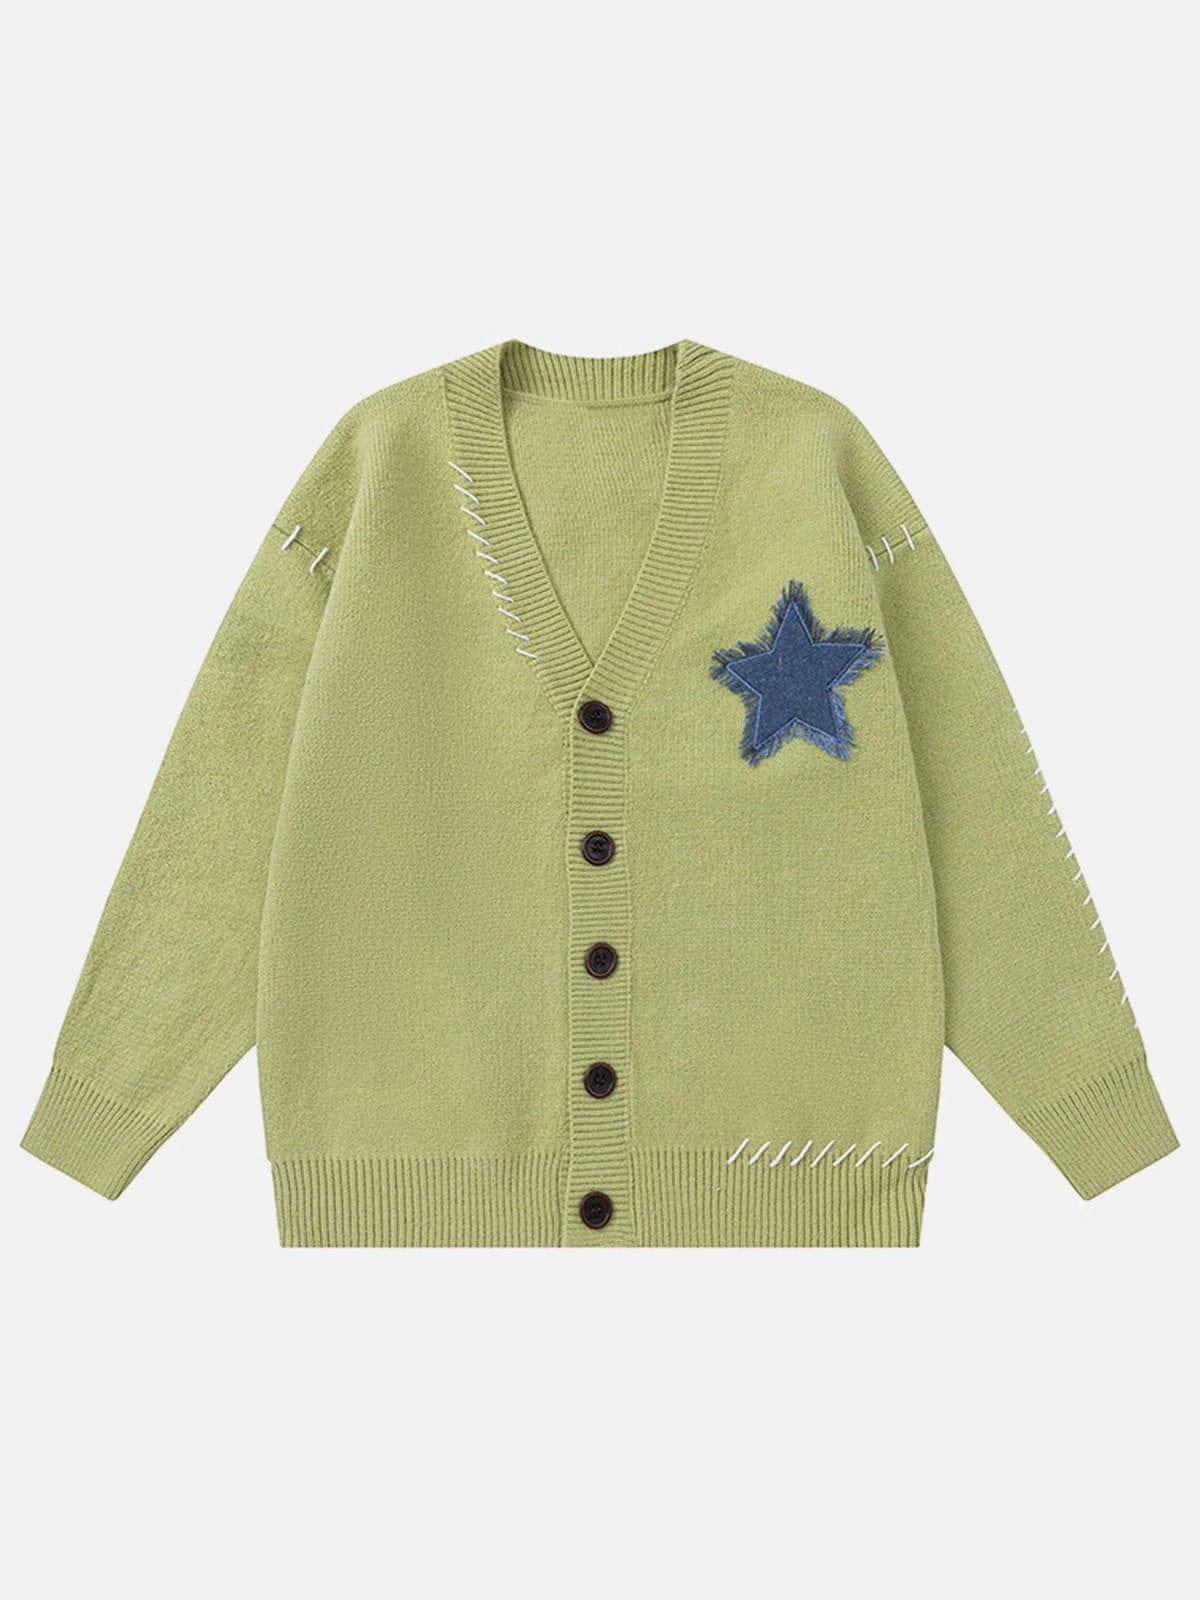 Star Applique Crochet Cardigan